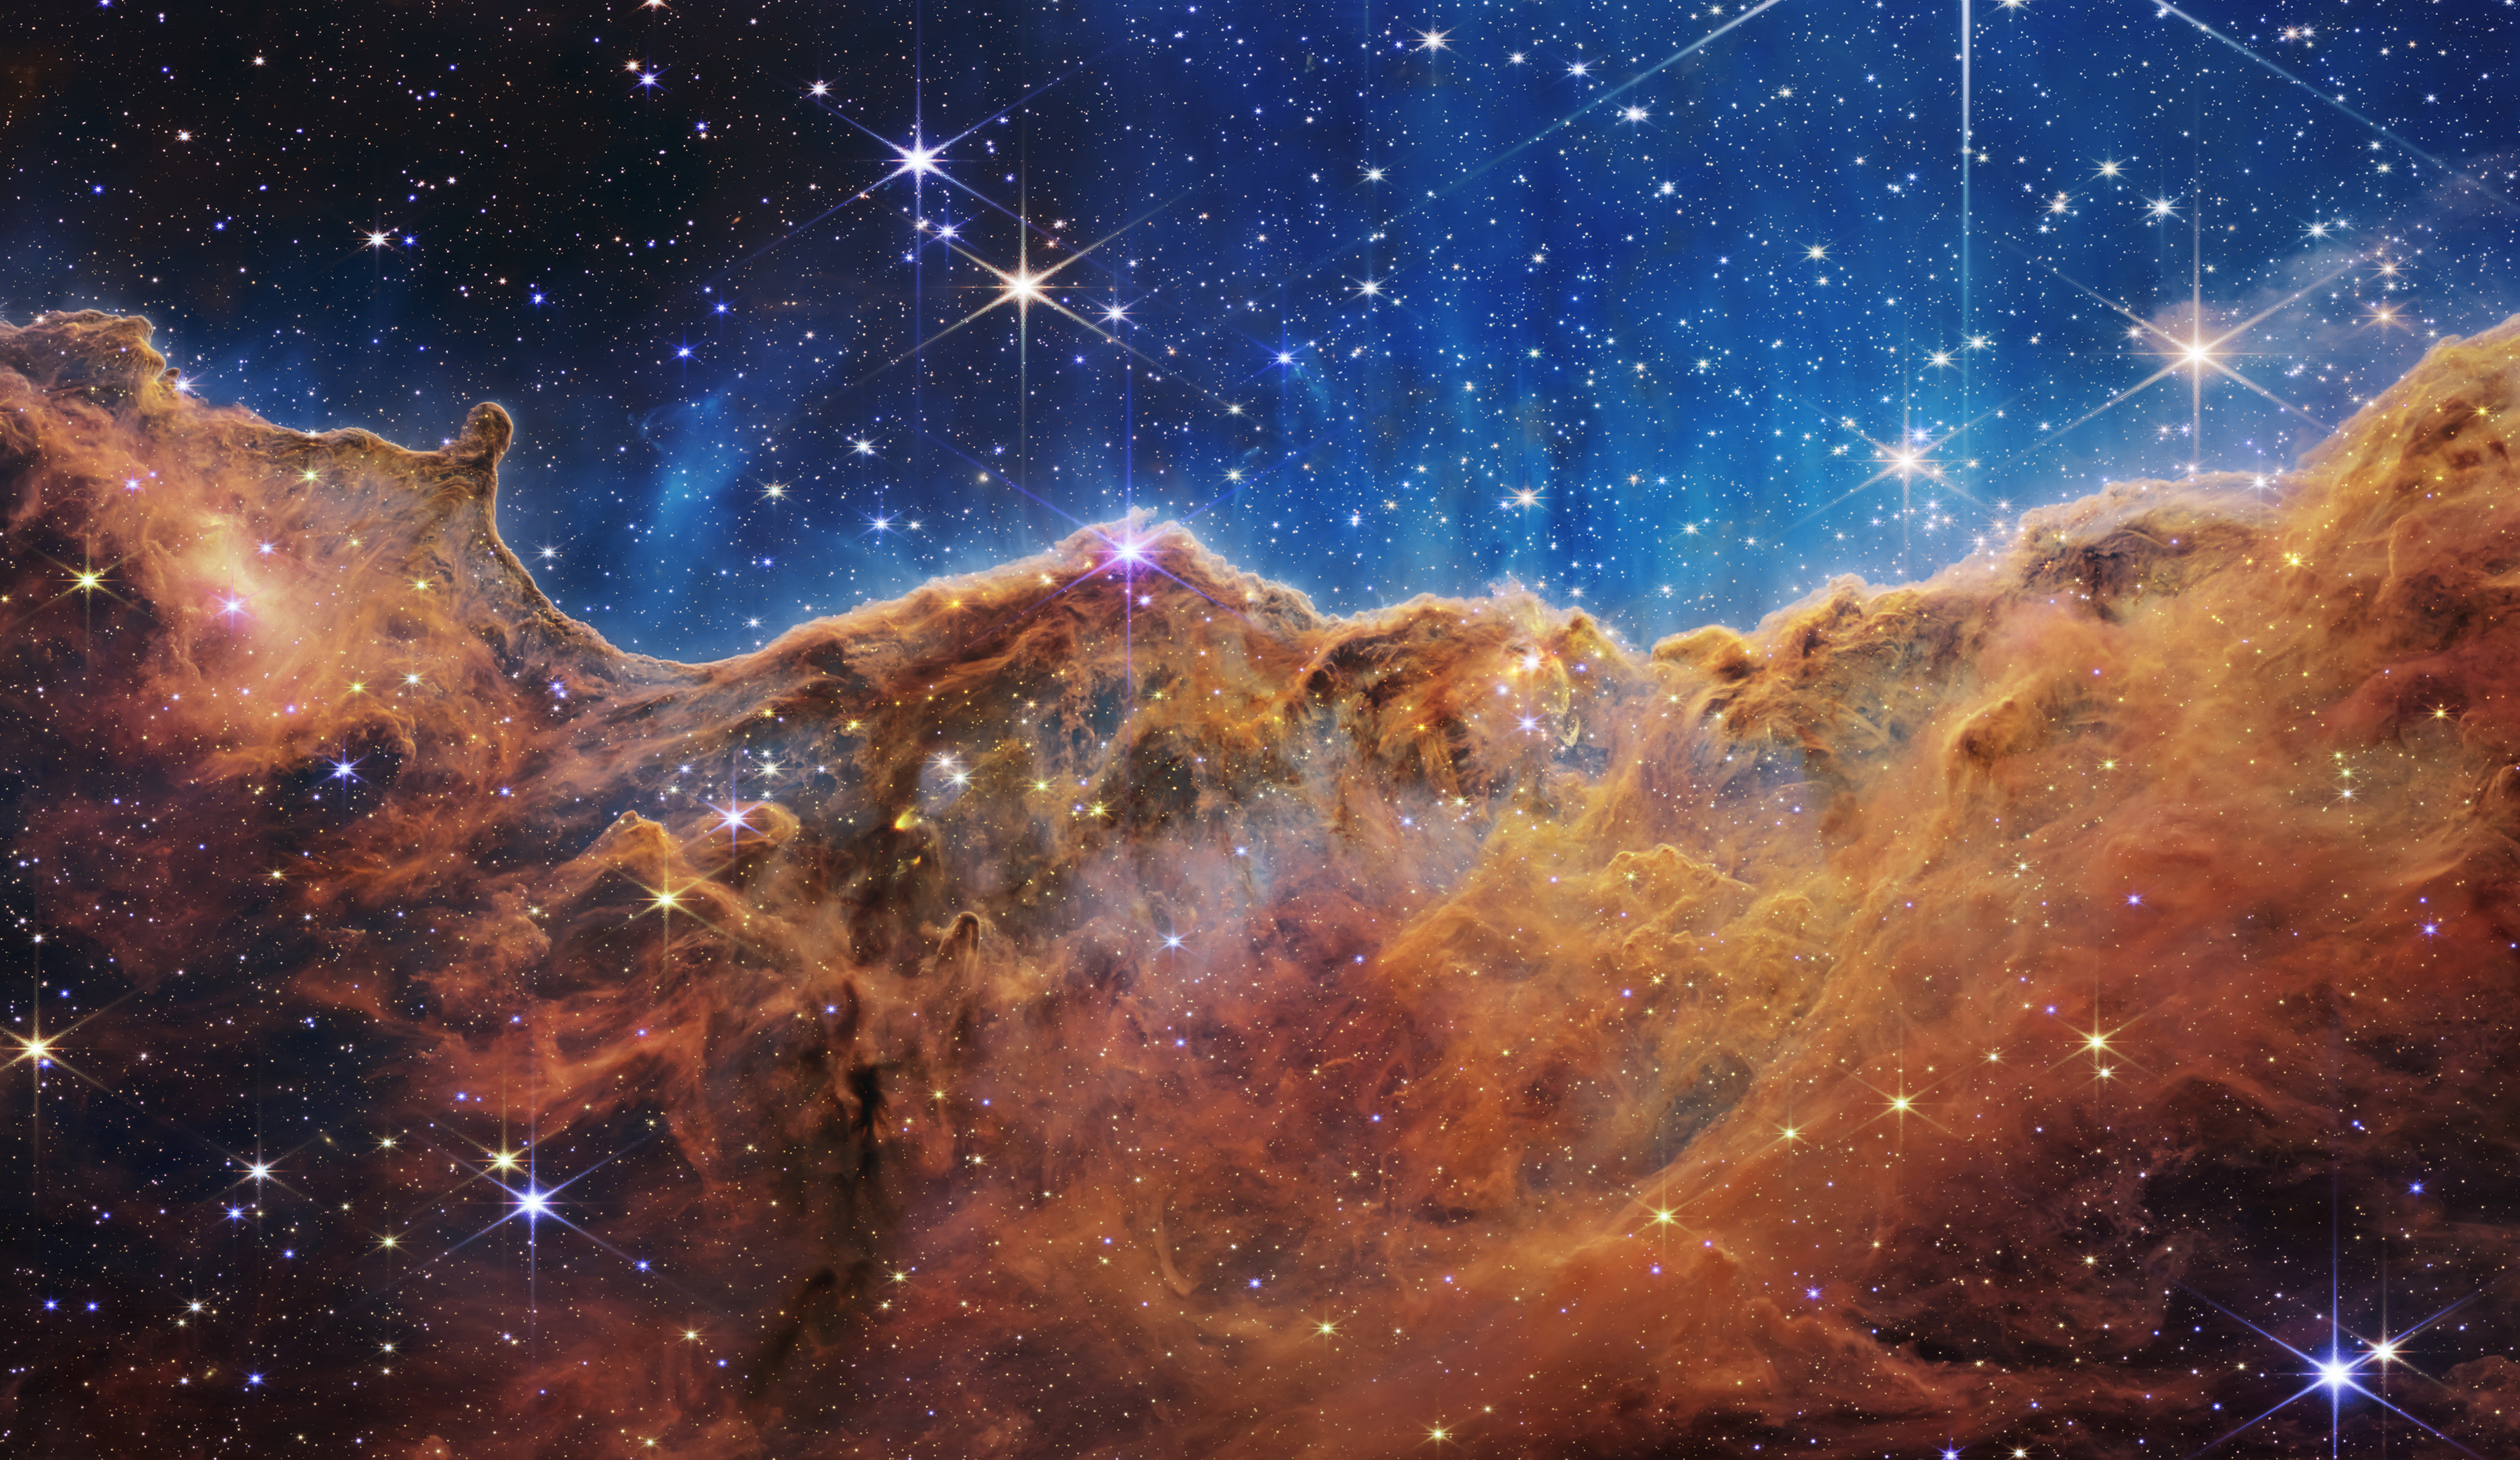 Carina Nebula Image NASA